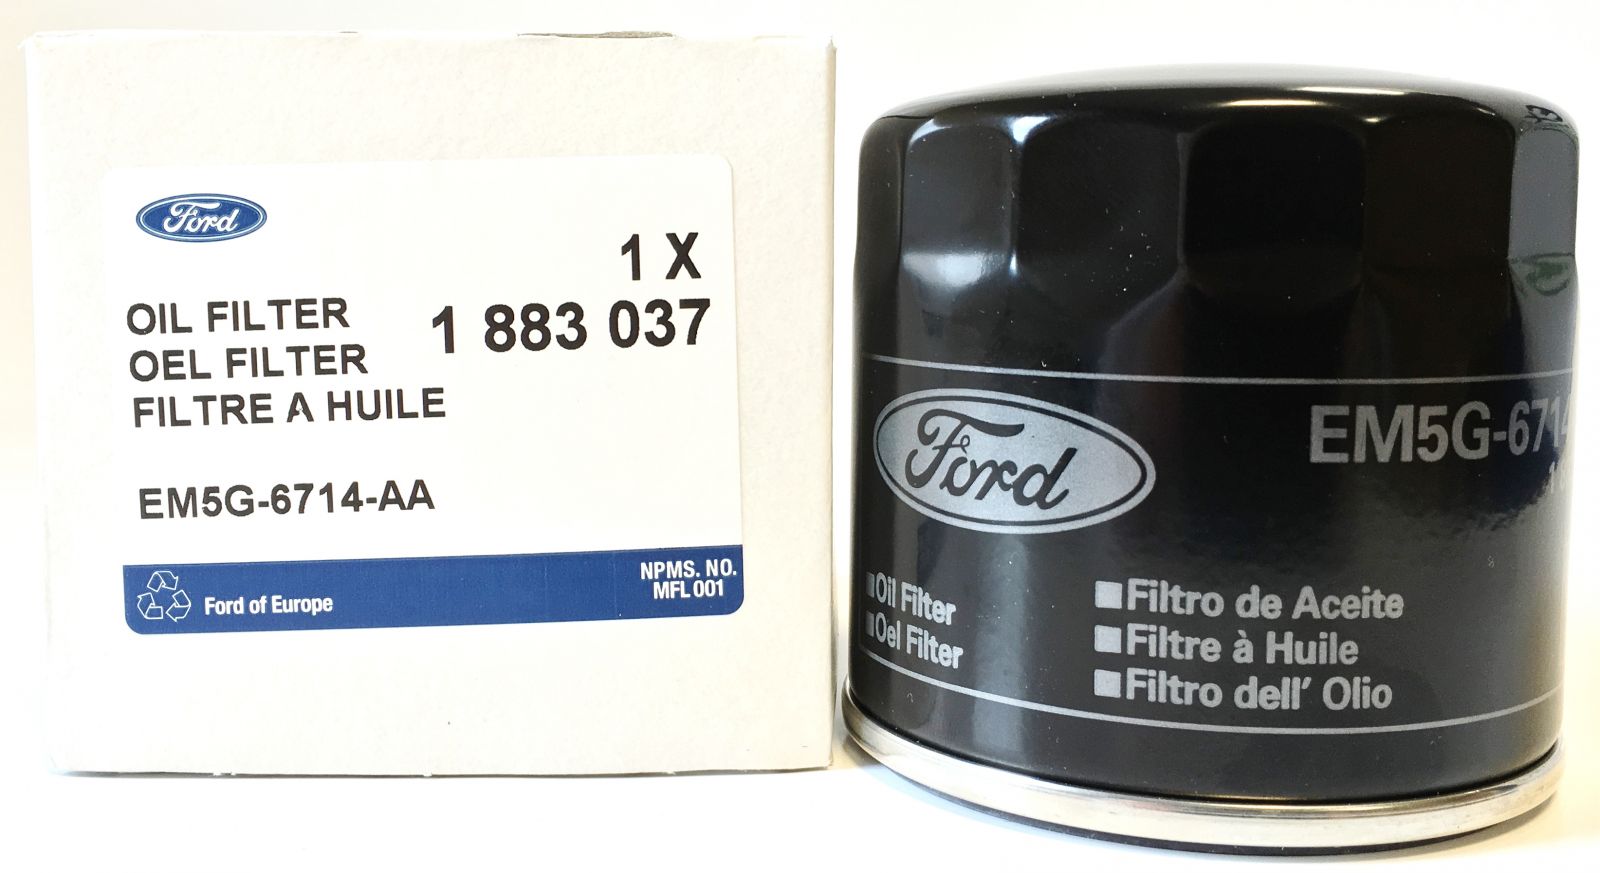 1883037 - O.E Boxed Oil Filter